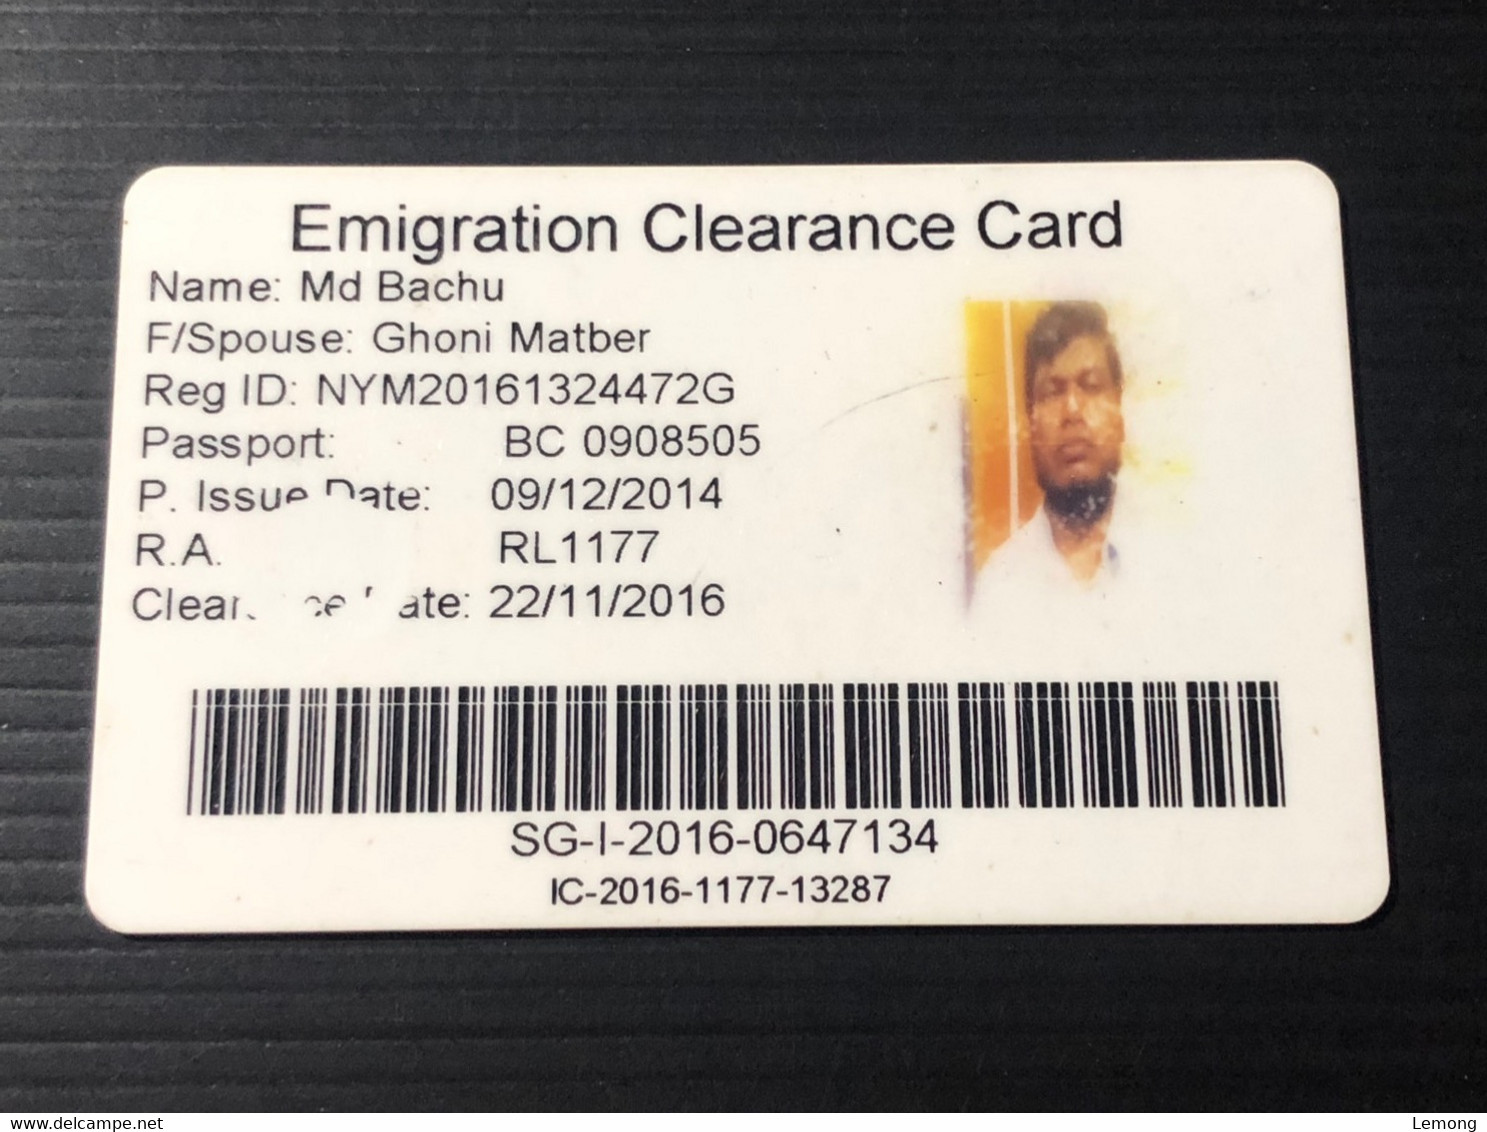 Bangladesh BMET Emigration Clearance Card, Chip Card - Bangladesh